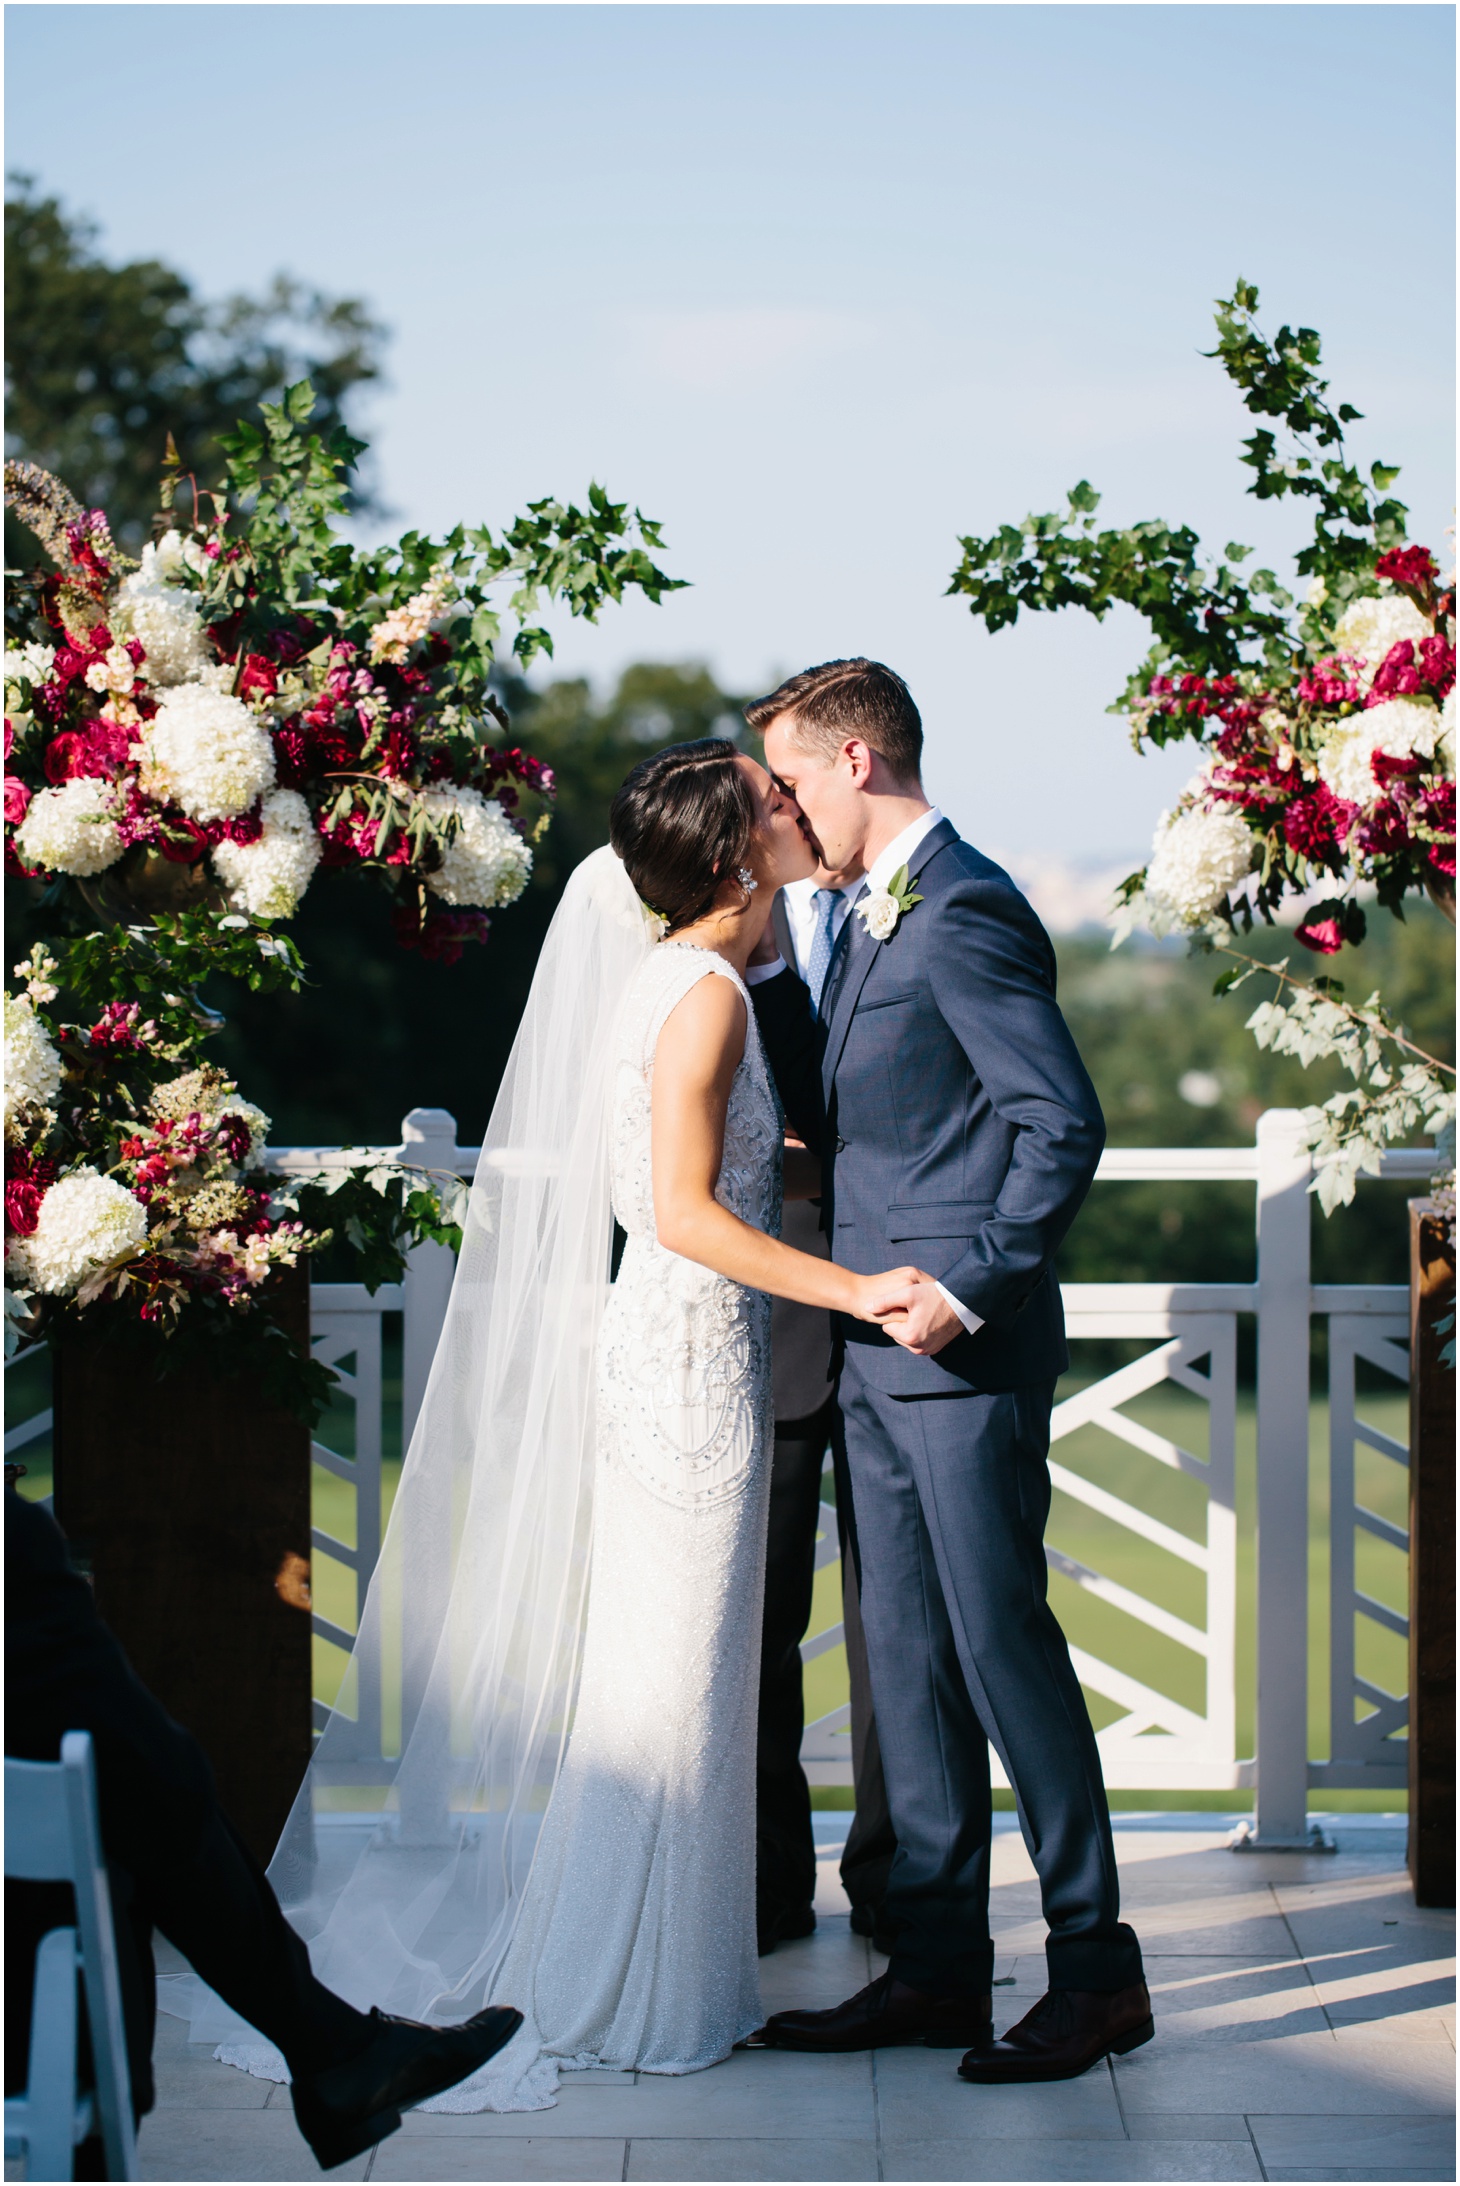 Raspberry & Navy Wedding at Army Navy Country Club by Sarah Bradshaw Photography_0040.jpg